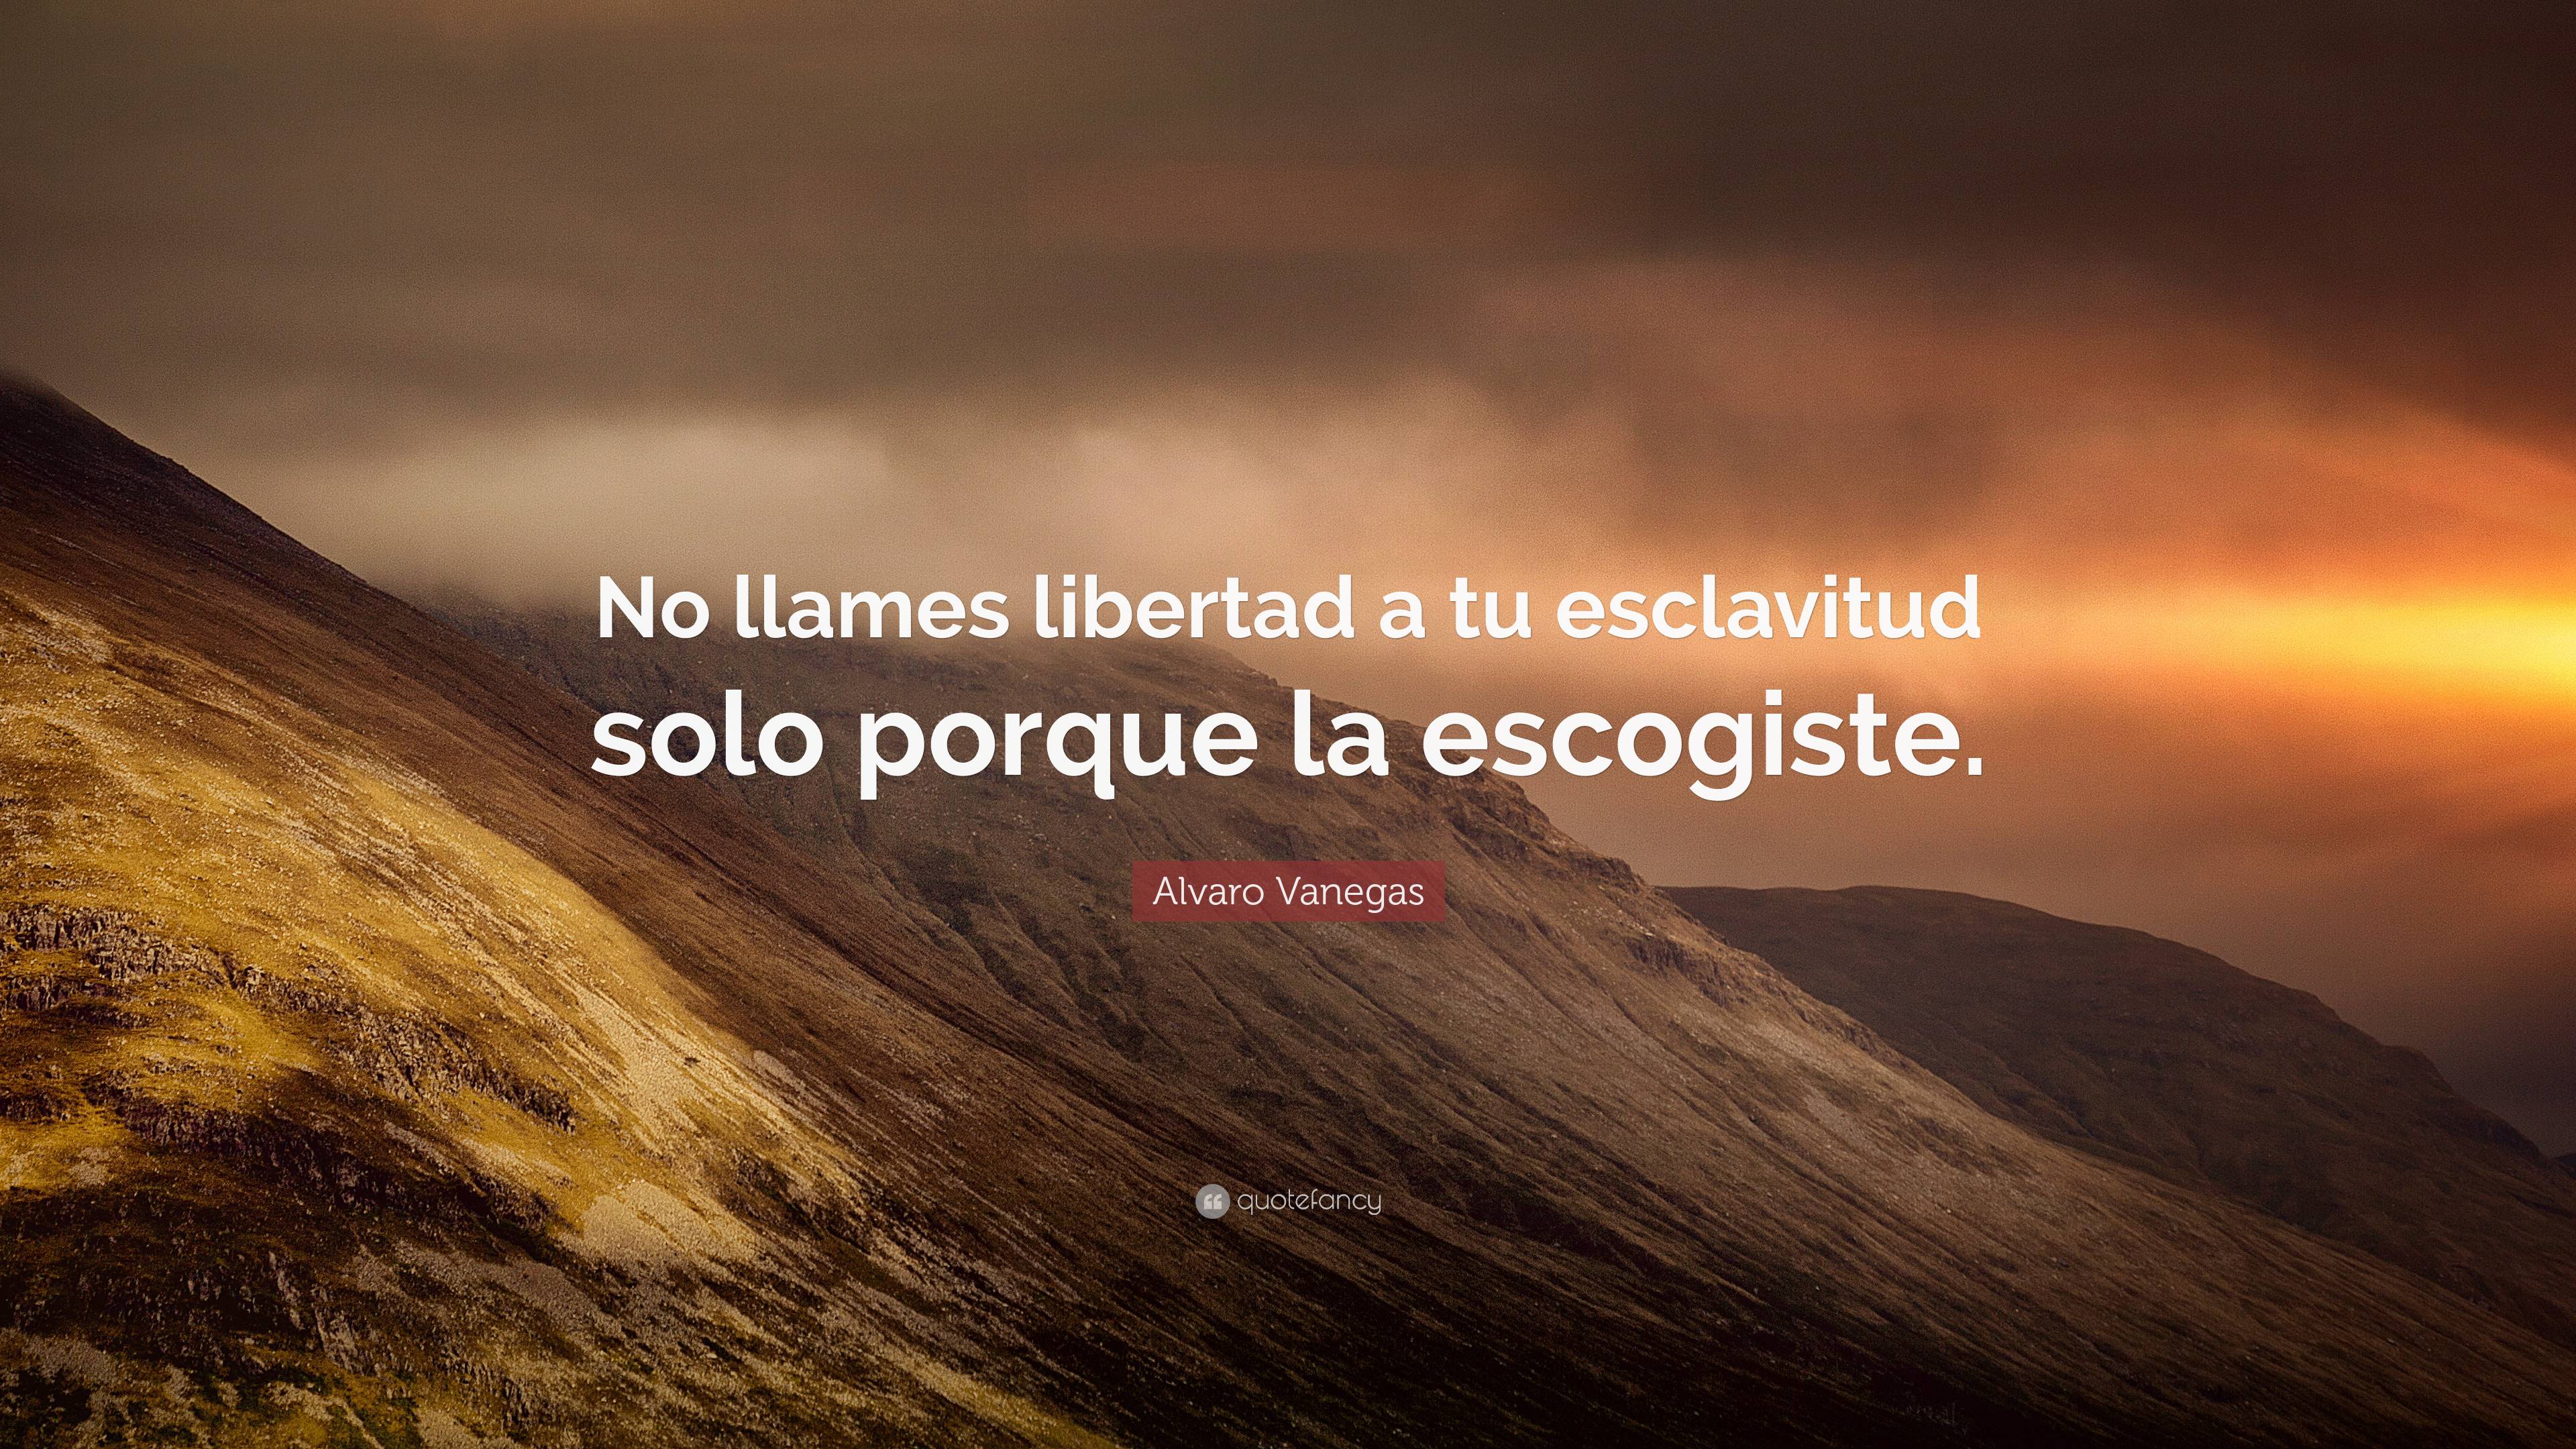 Alvaro Vanegas Quote: “No llames libertad a tu esclavitud solo porque ...